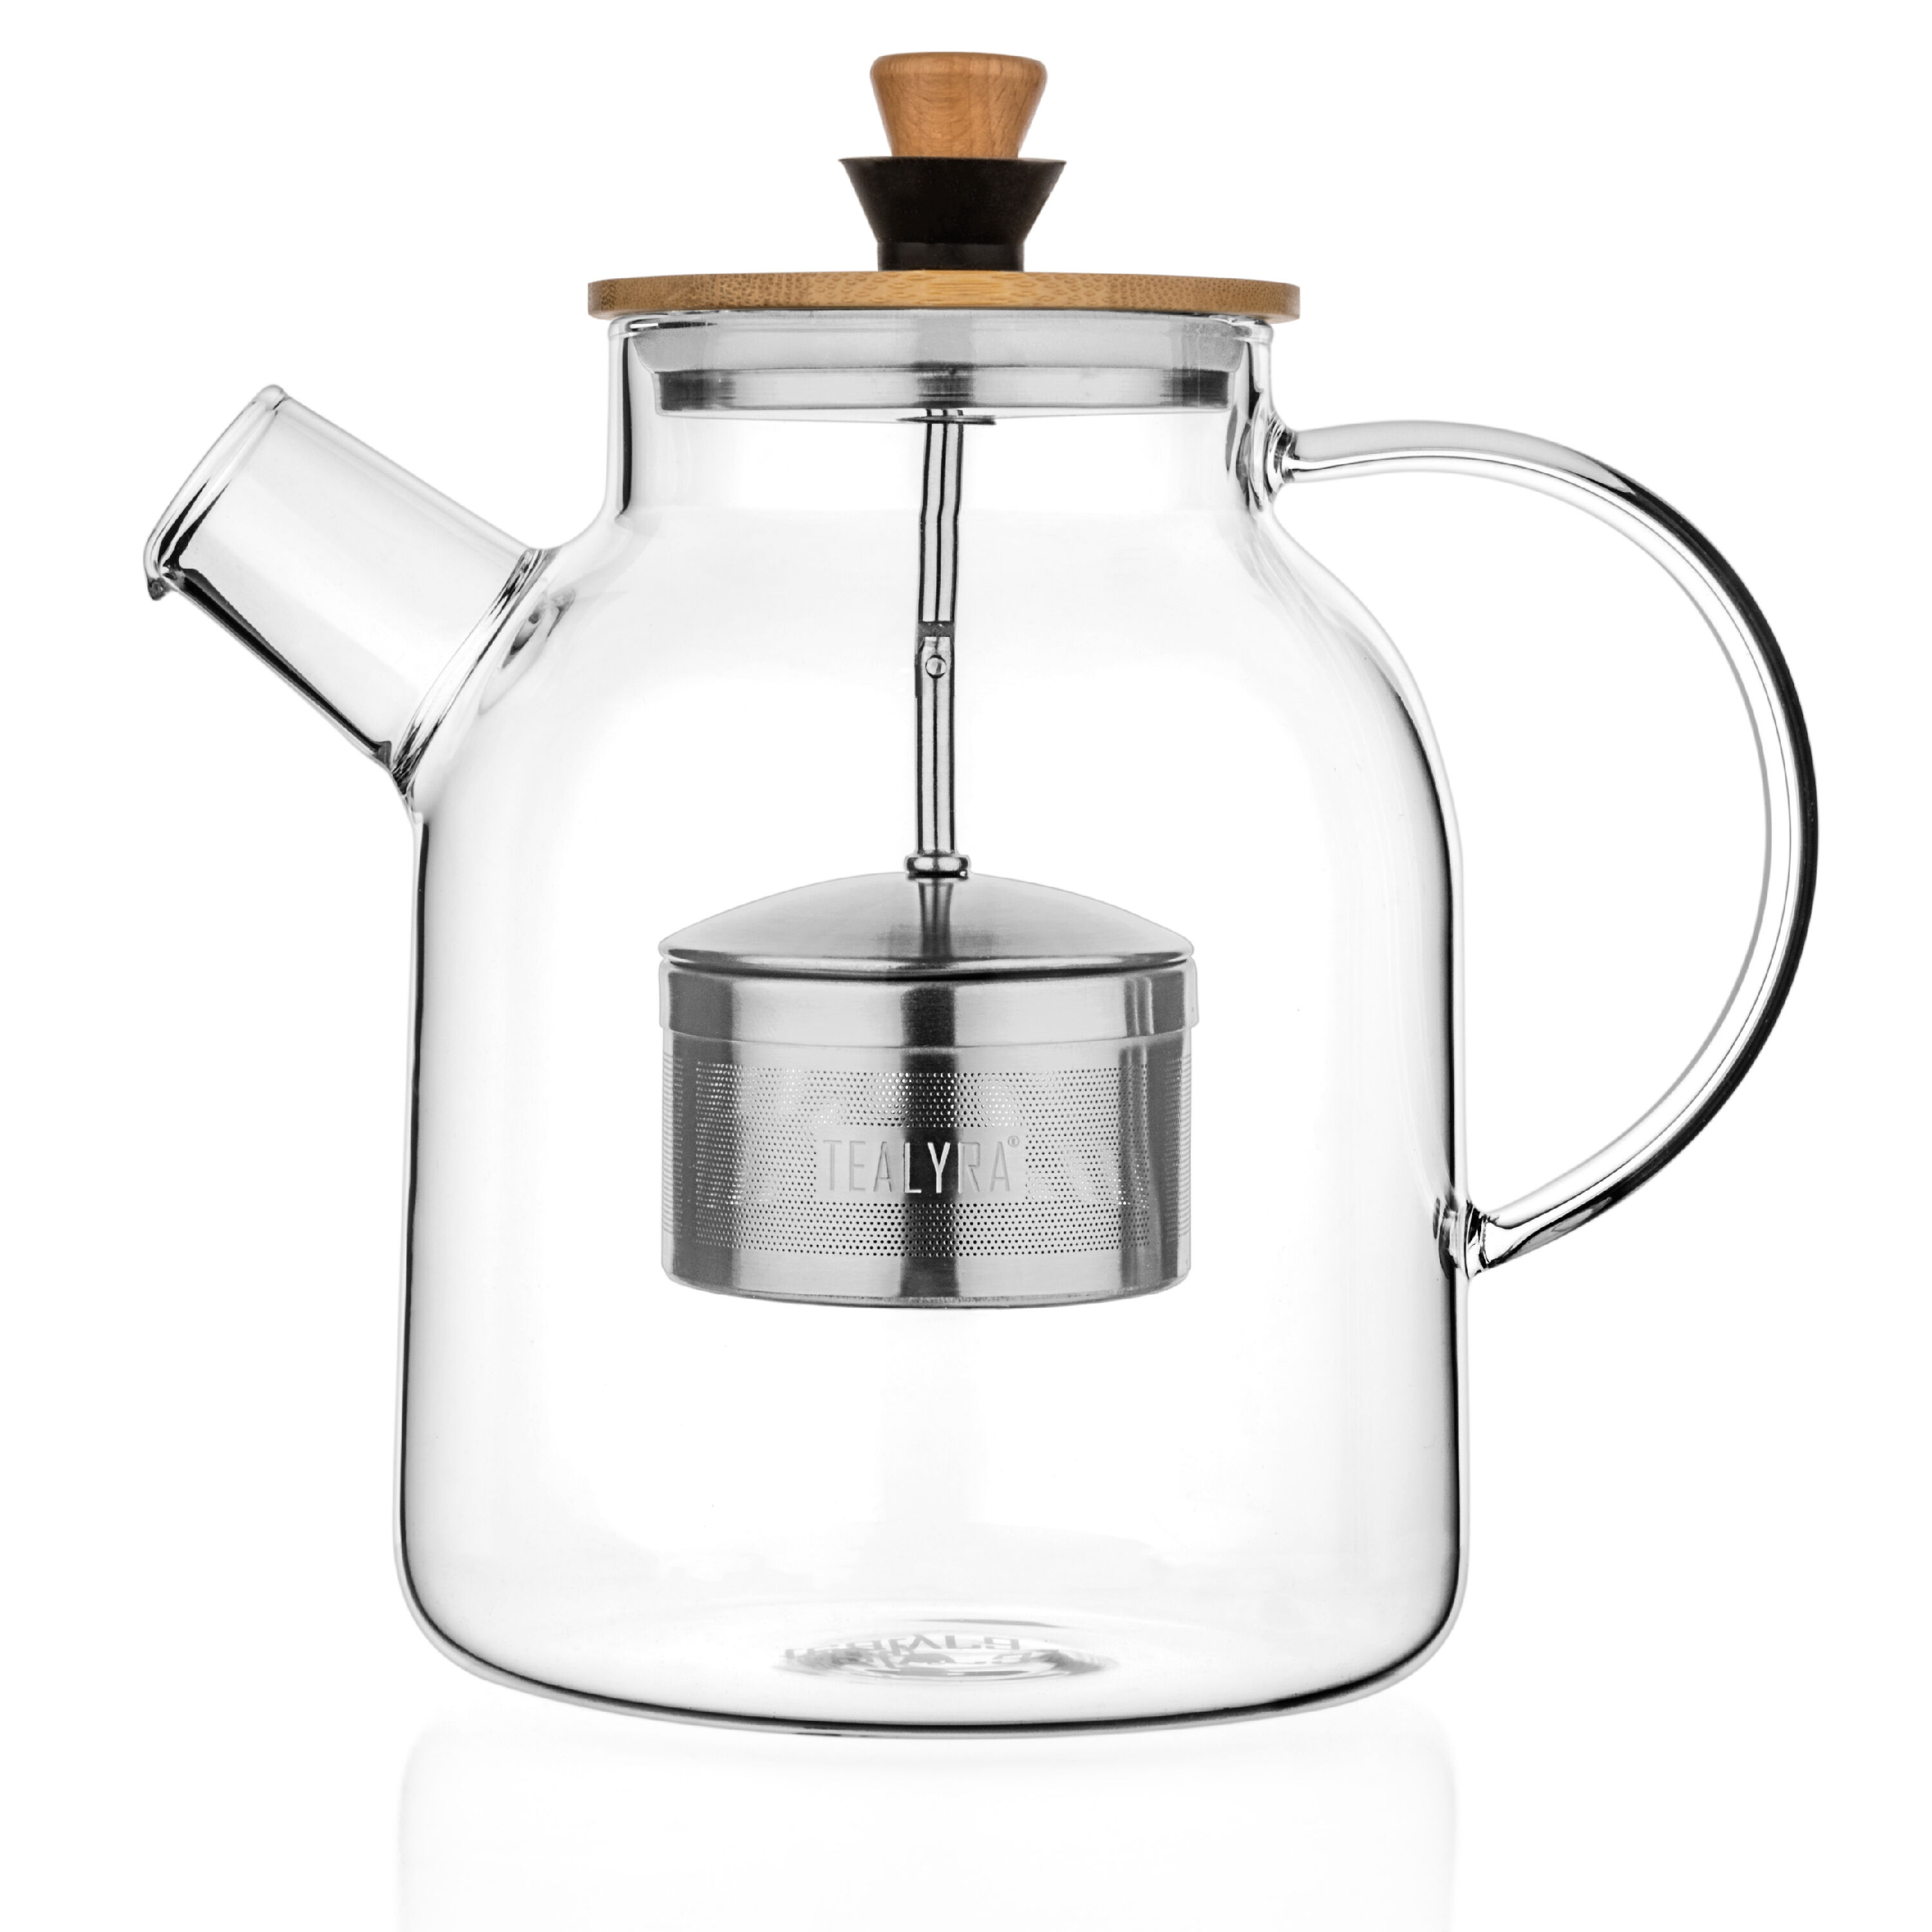 https://cdn.tealyra.com/images/detailed/9/glass-teapot-and-kettle-w-infuser-47oz.jpg